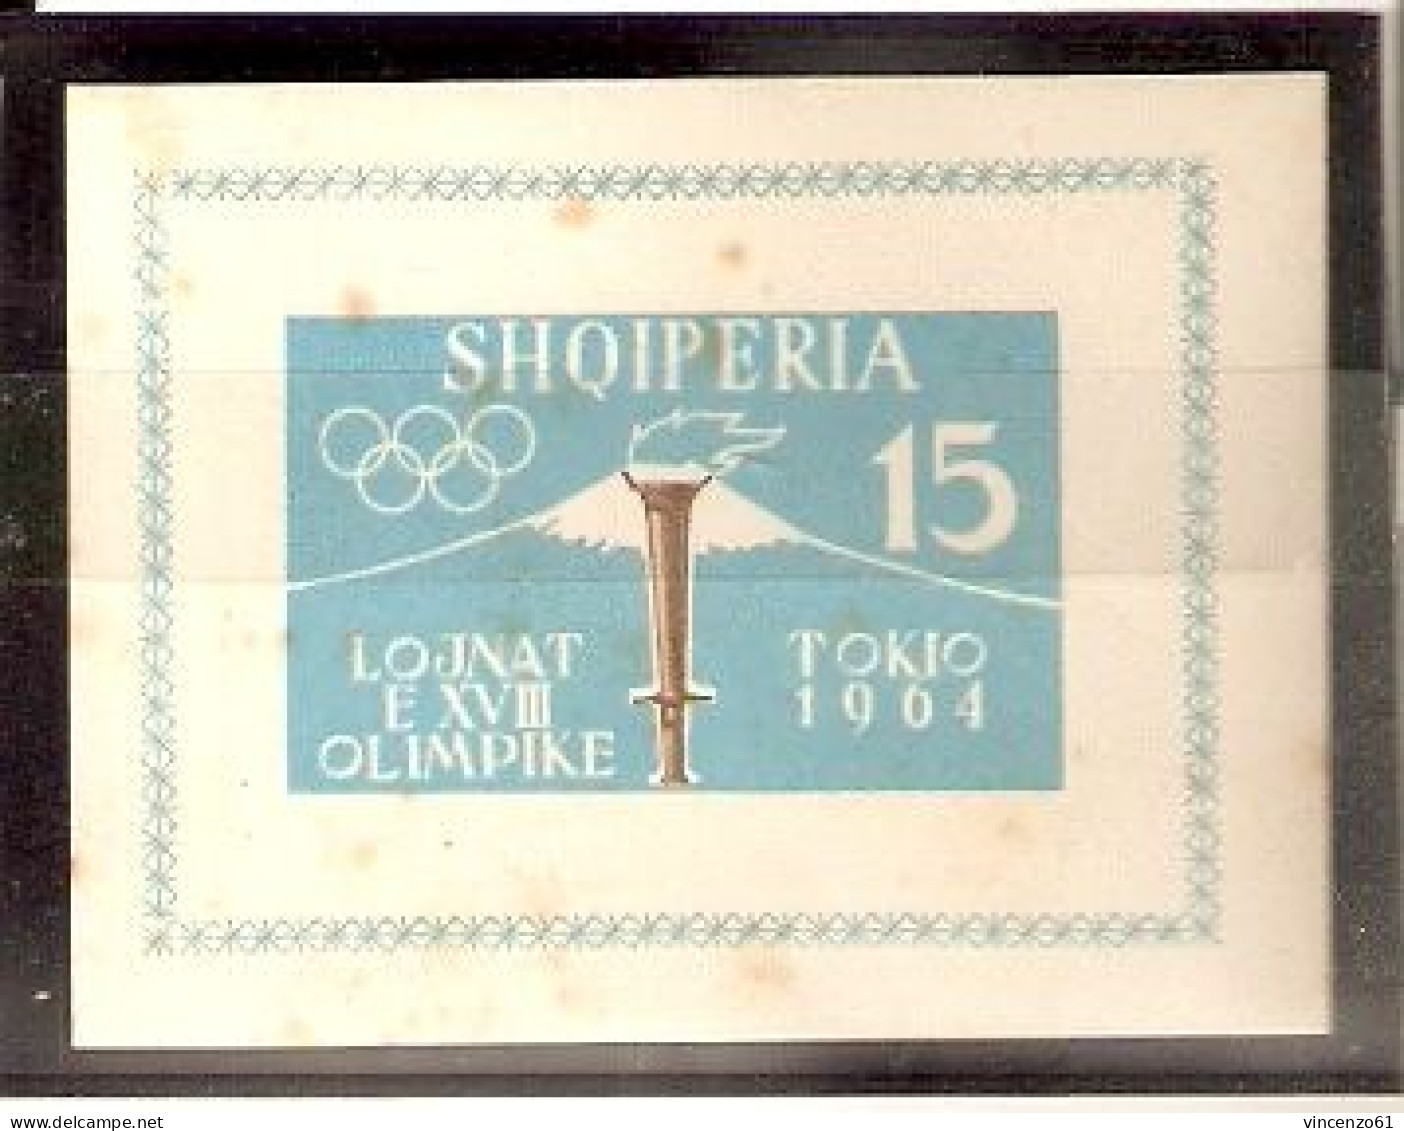 SHQIPERIA TOKIO 1964 OLIMPIC GAME UNPERFORATED - Summer 1964: Tokyo